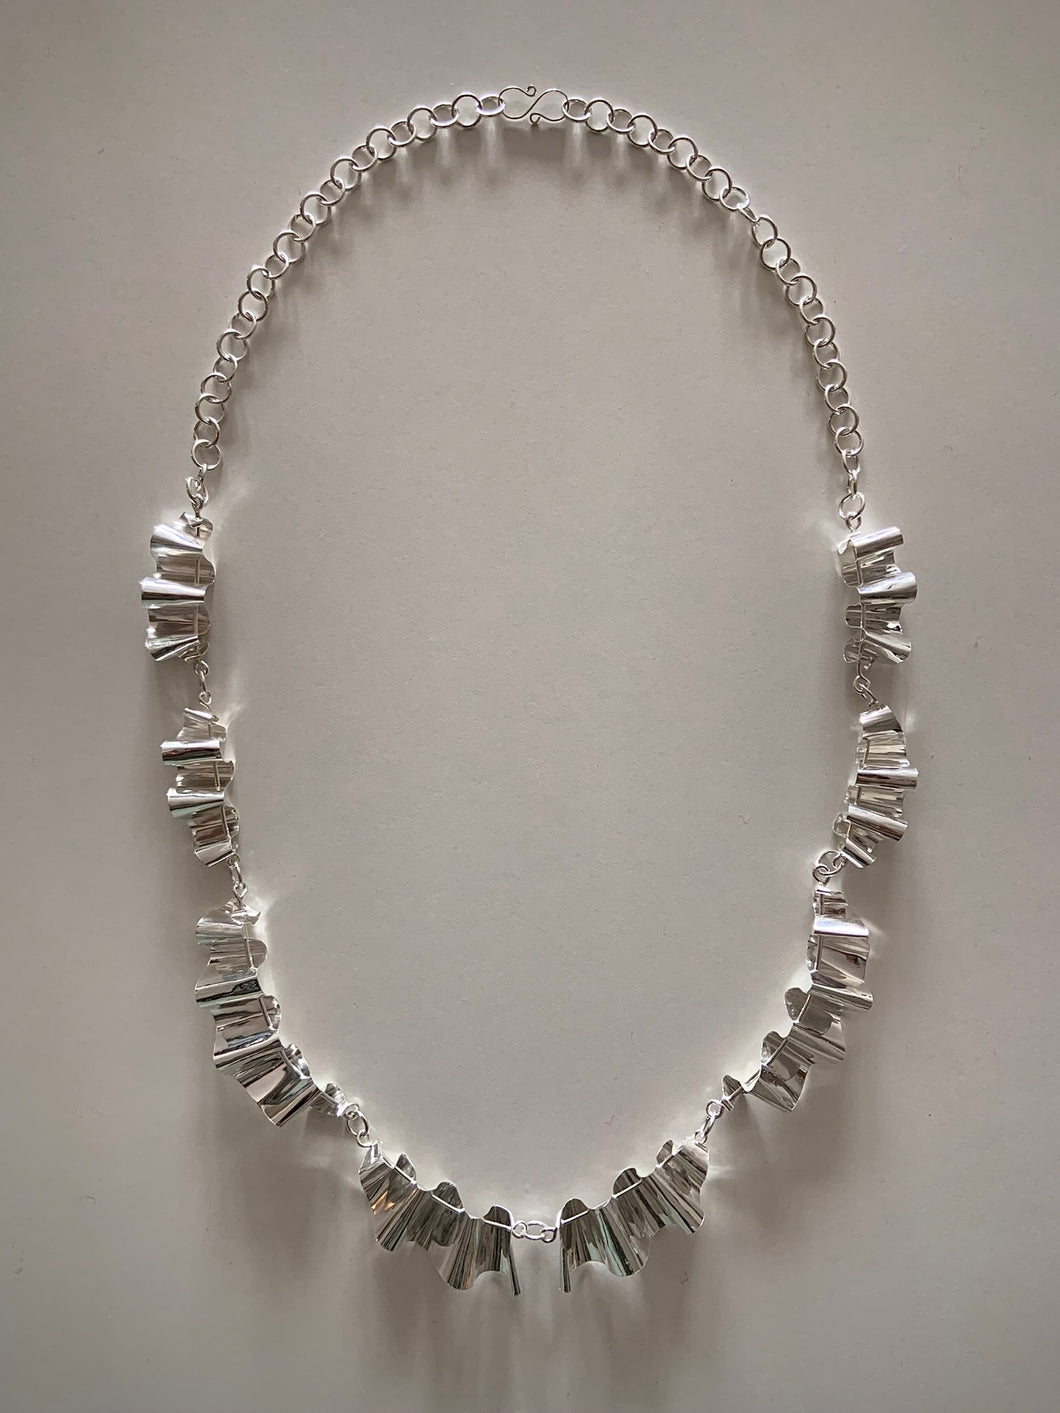 'Long Ruffled Necklace' (2021)